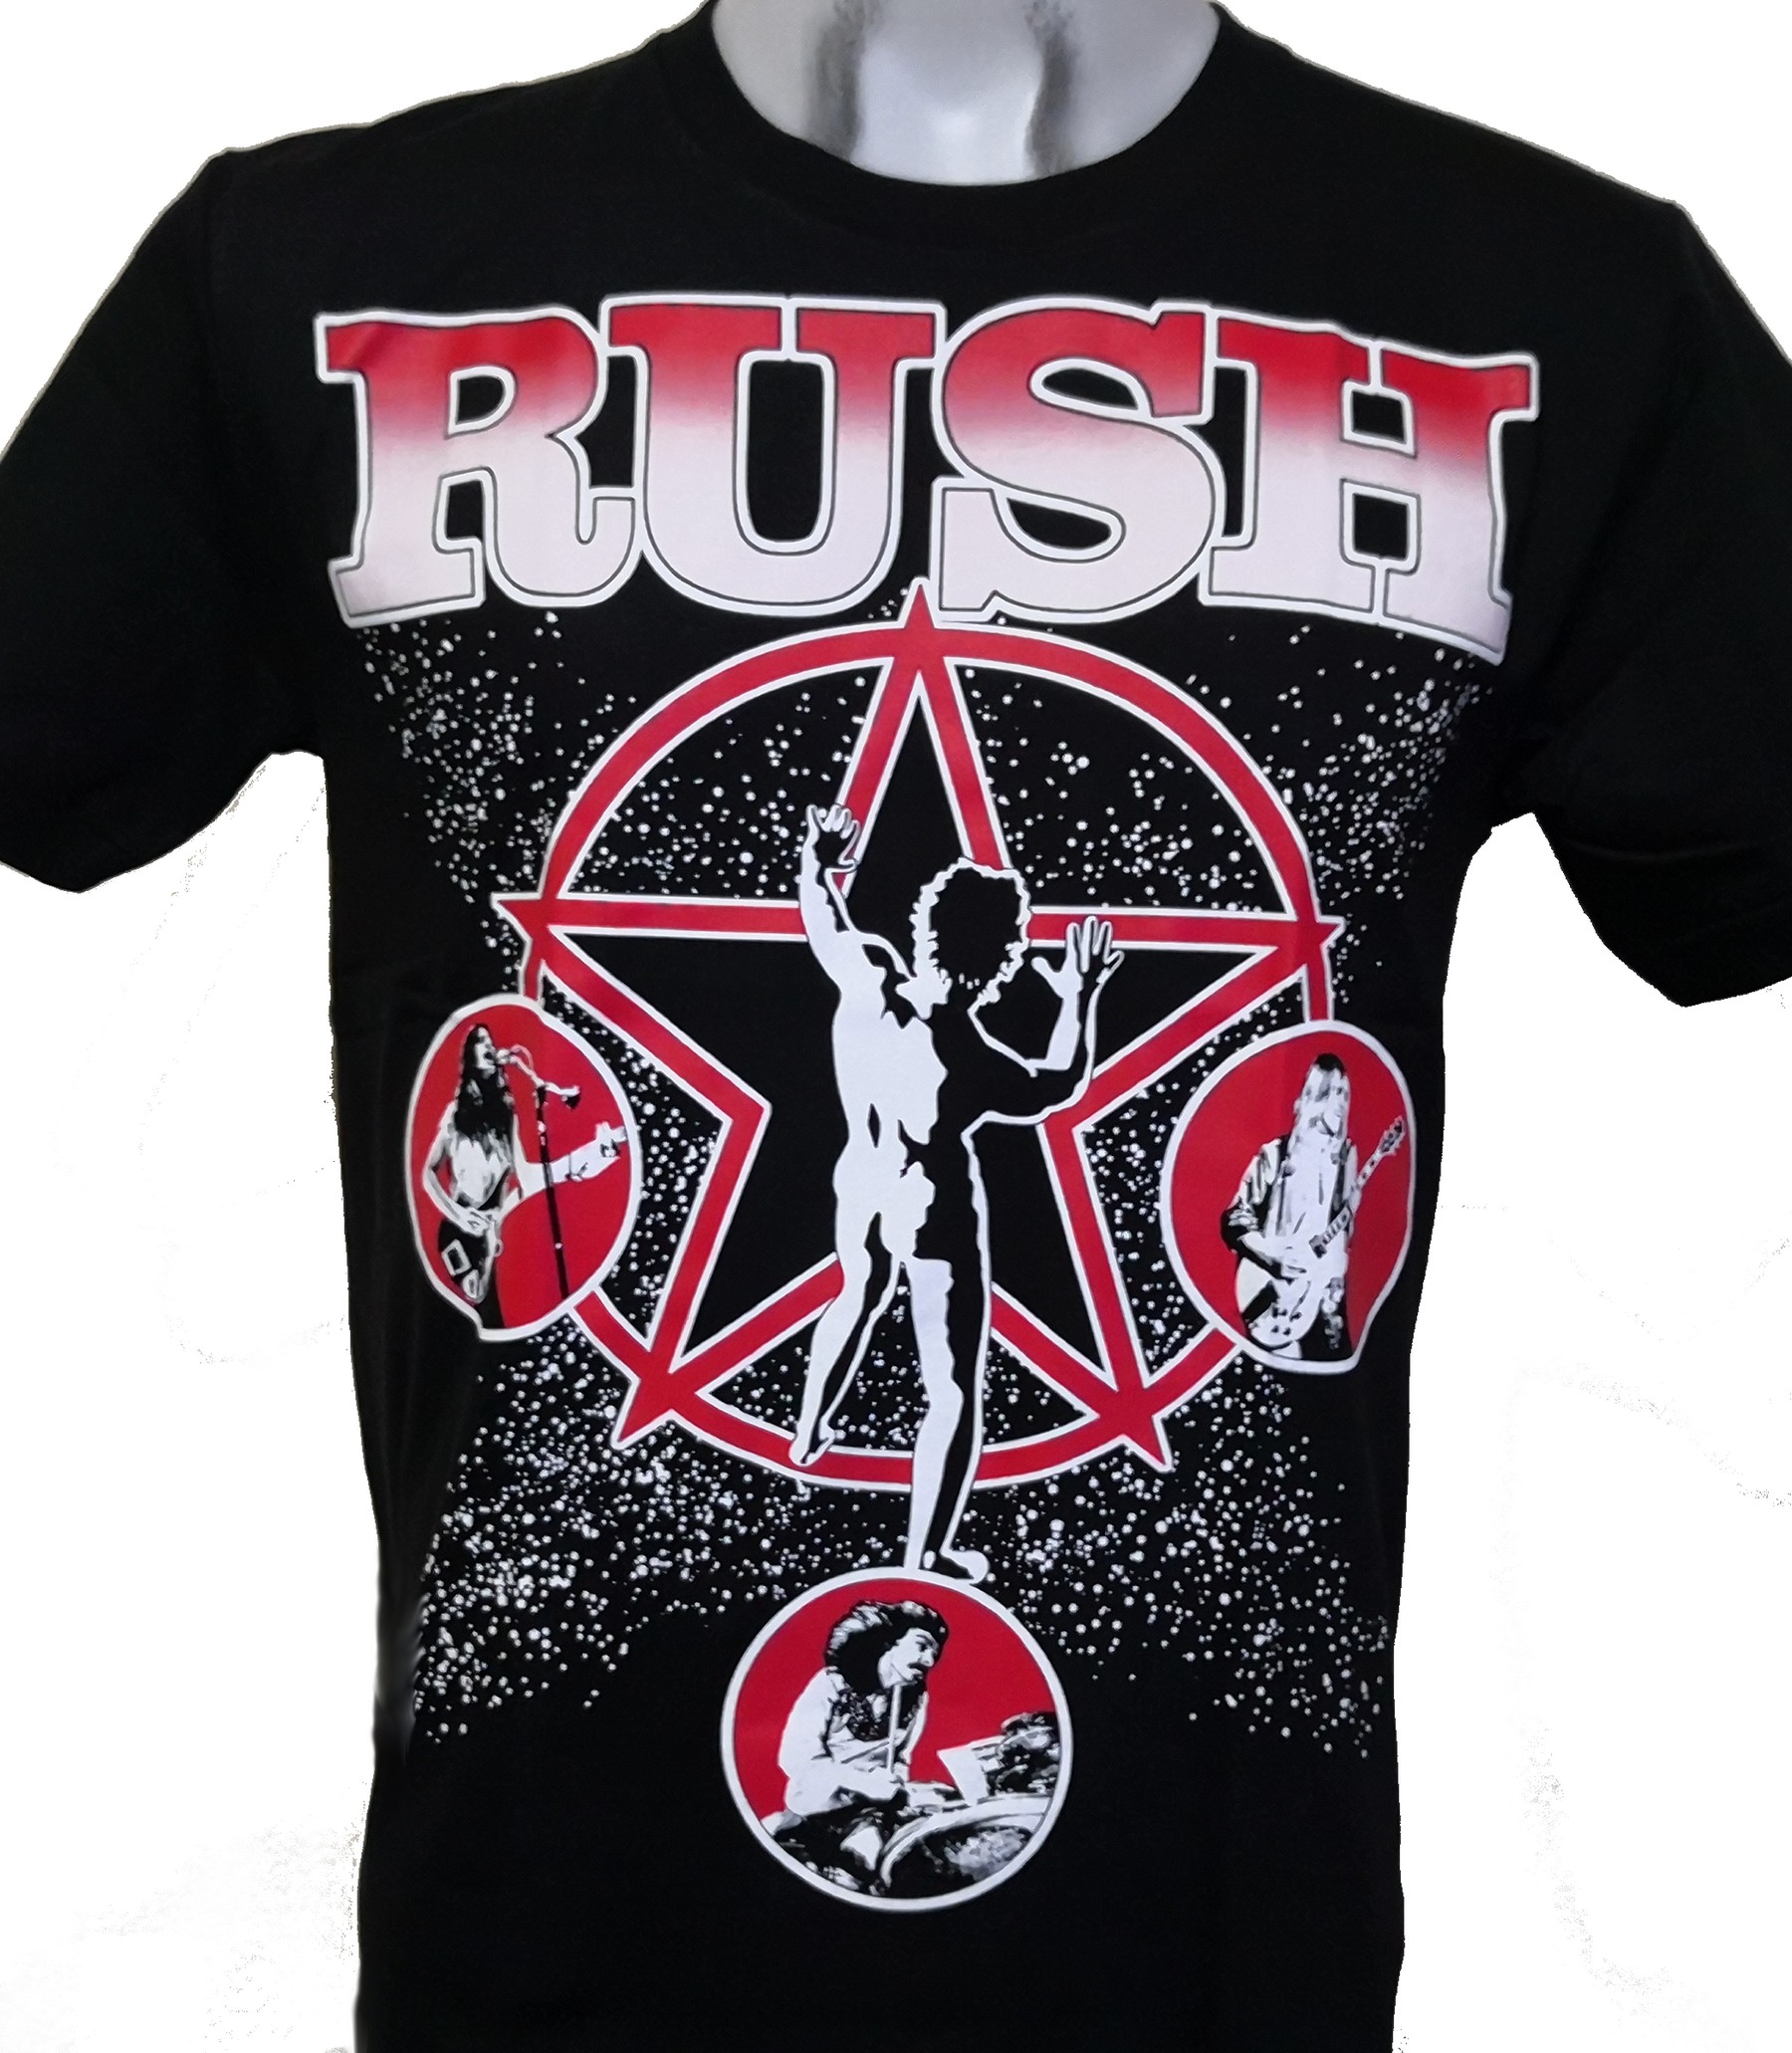 Rush t-shirt size S – RoxxBKK